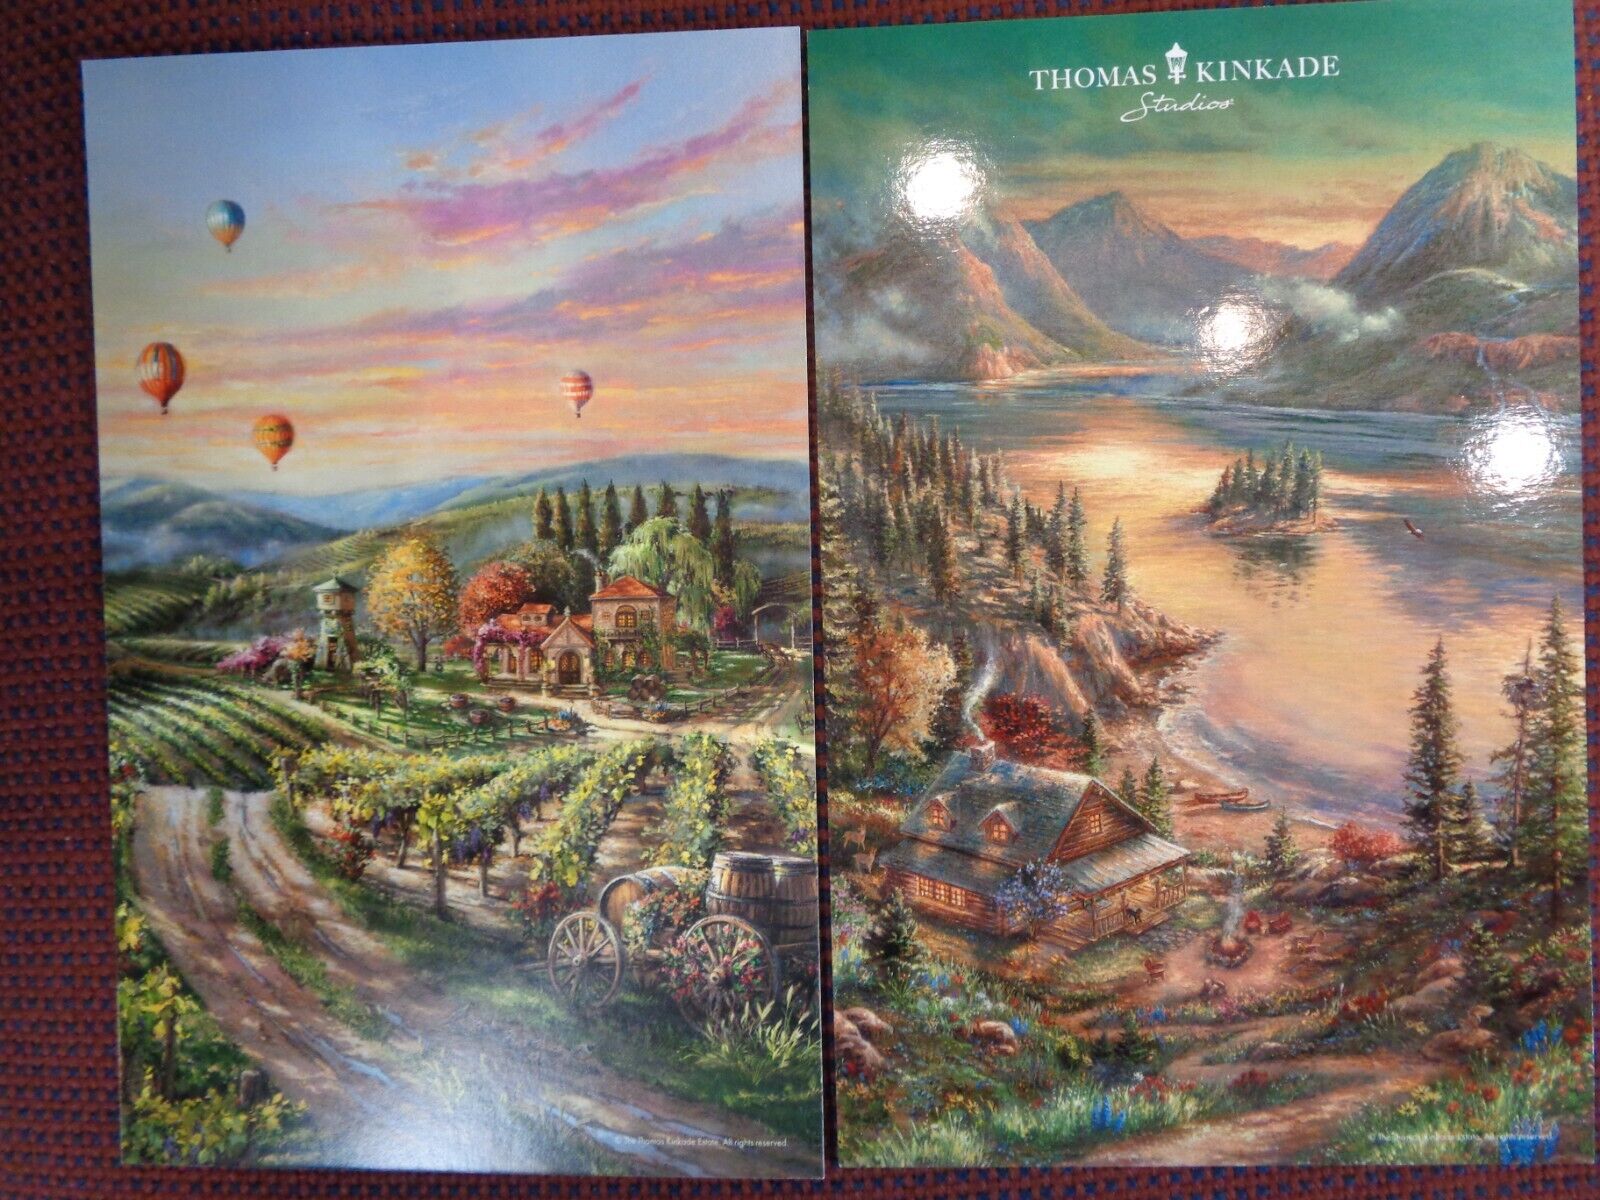 Thomas Kinkade Postcards Peaceful Valley Vineyard Lakeside Splendor (2)cards